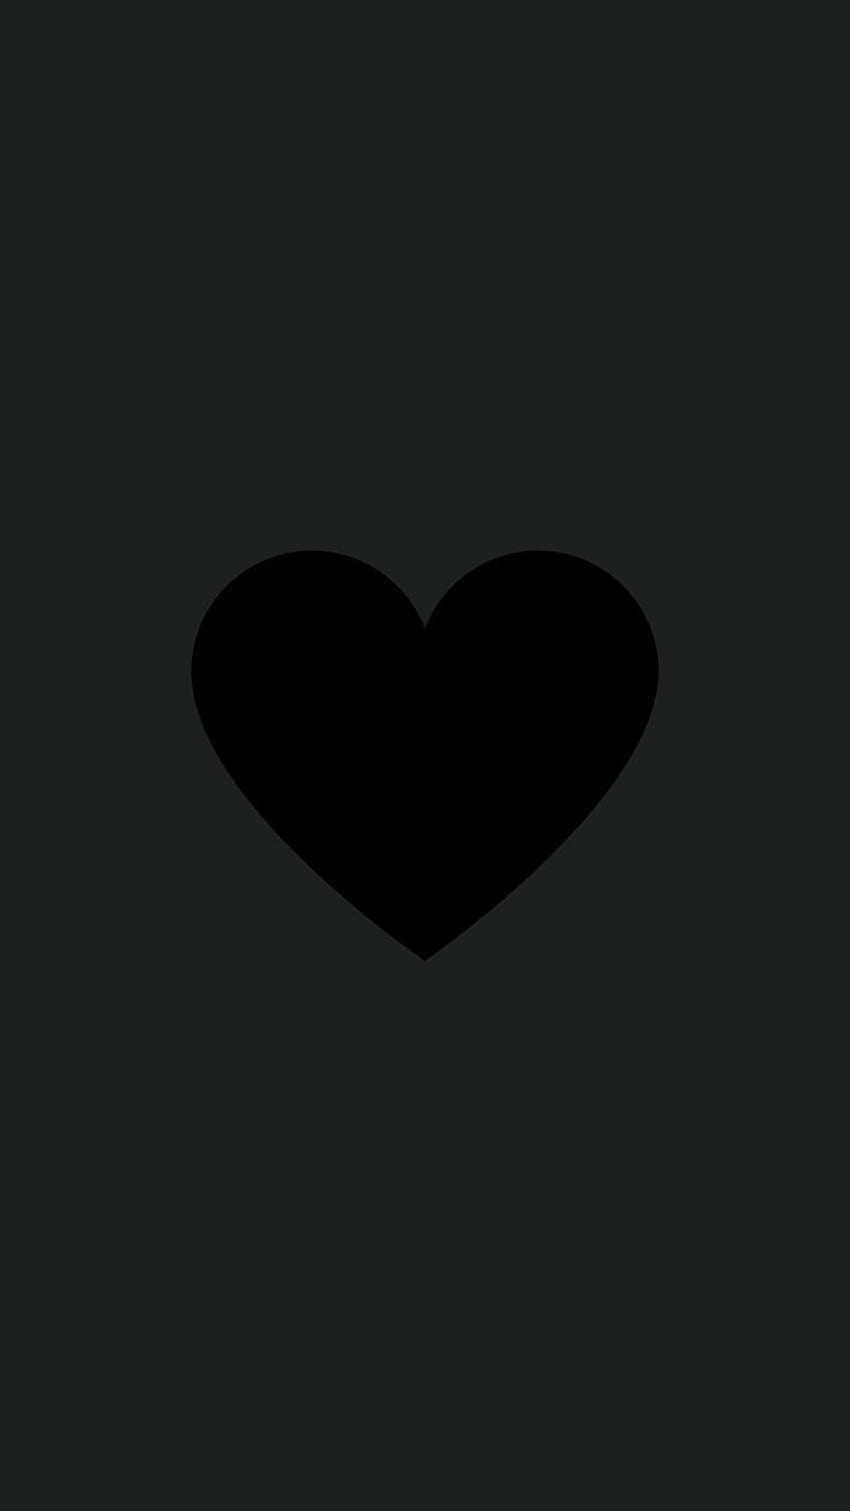 iPhone wallpaper heart | Black wallpaper iphone, Black wallpapers tumblr,  Black phone wallpaper